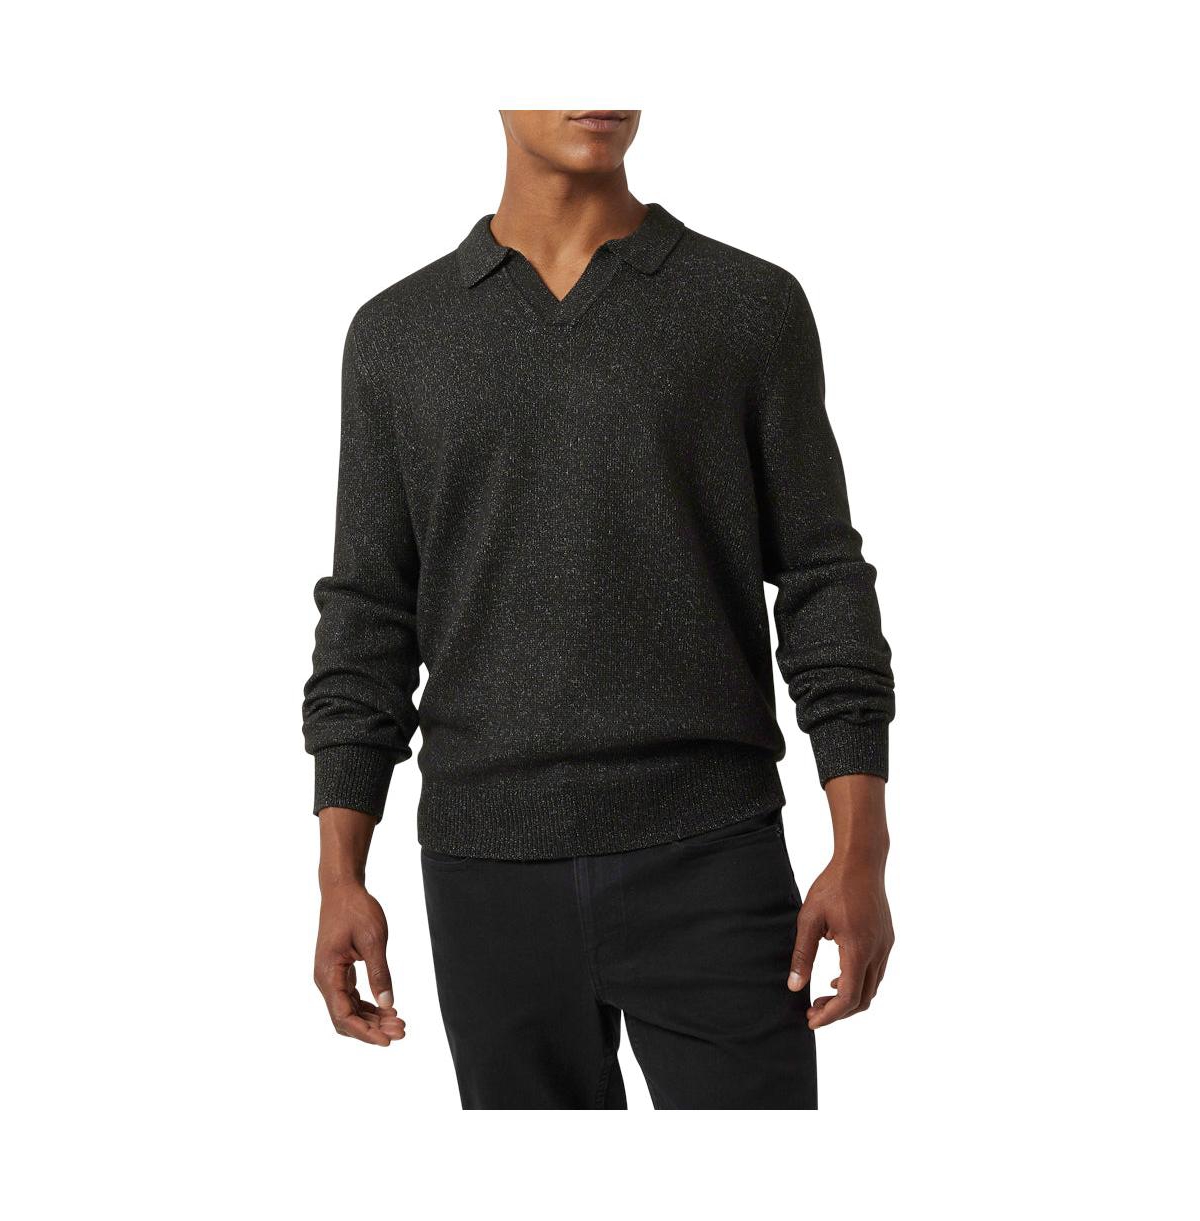 Men's V-Neck Johnny Collar Pullover Sweater - Black